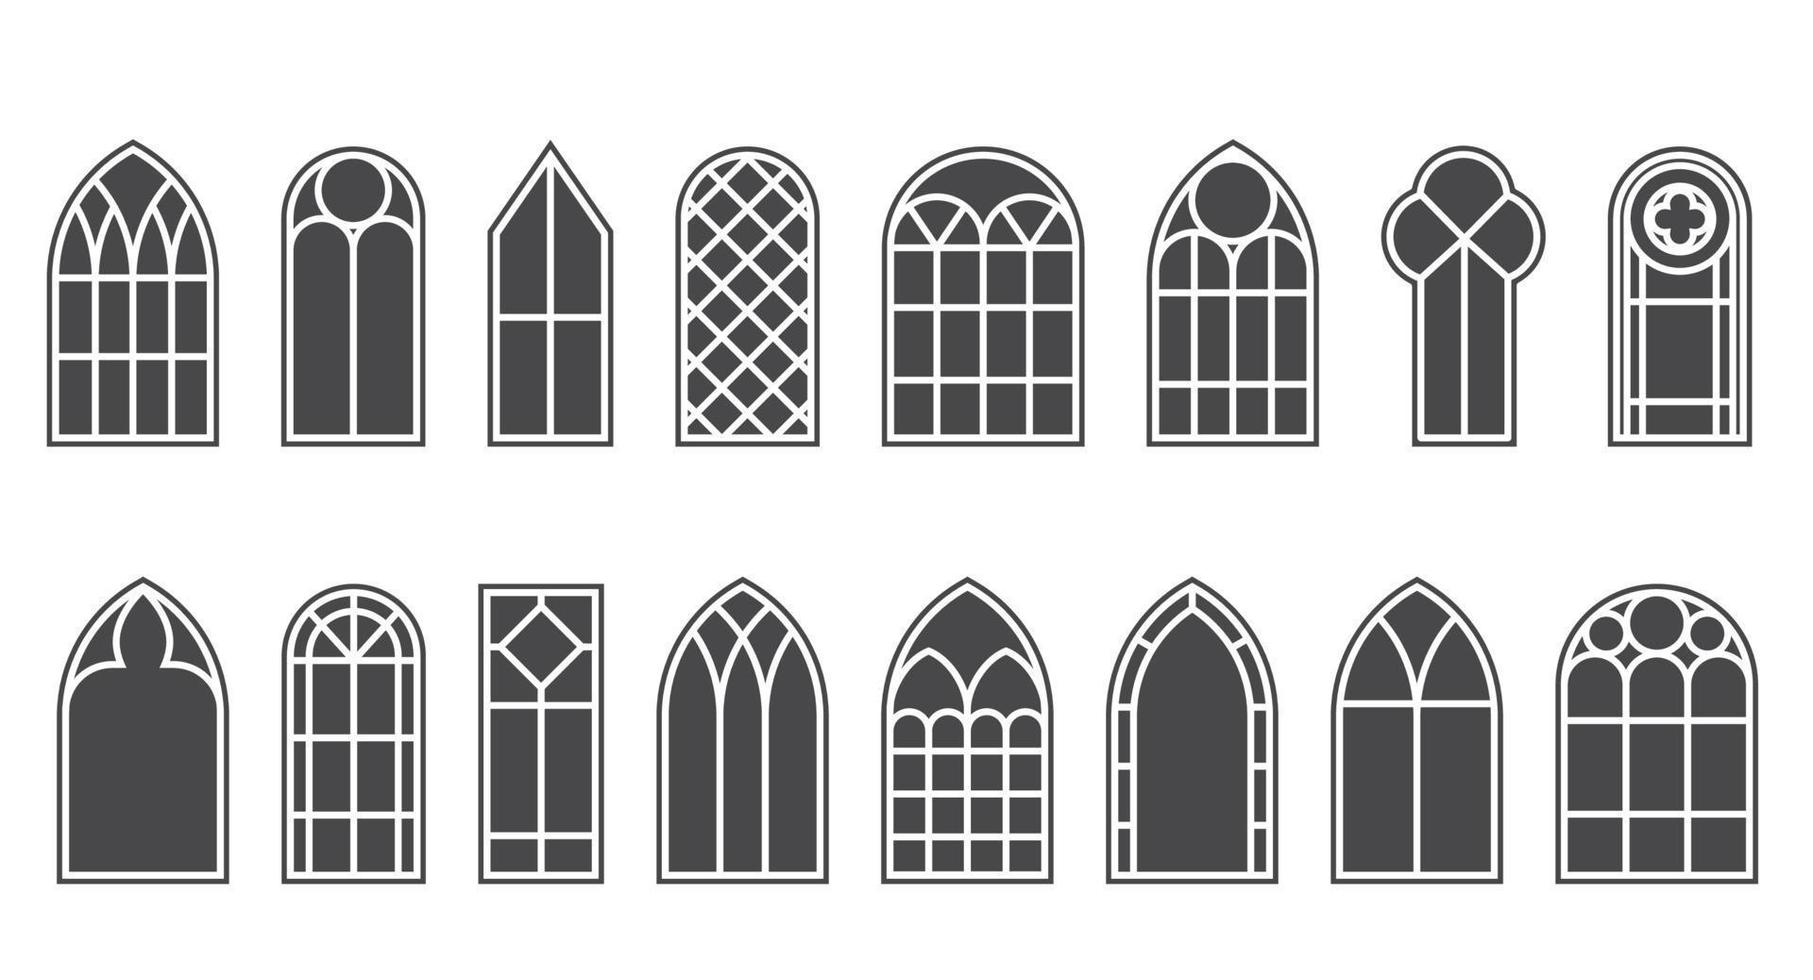 kyrka medeltida fönster set. gammal gotisk stil arkitekturelement. vektor glyph illustration på vit bakgrund.